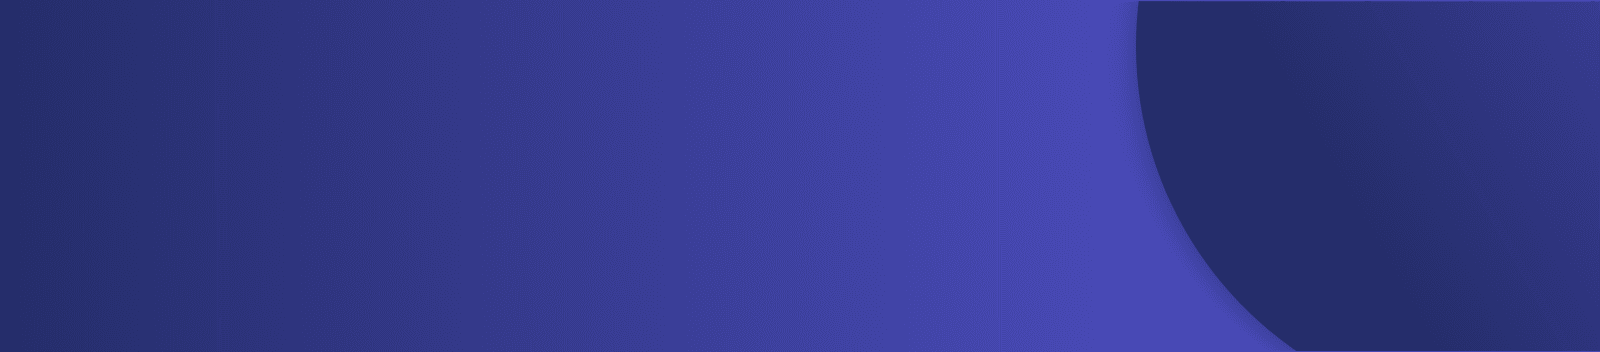 purple-background